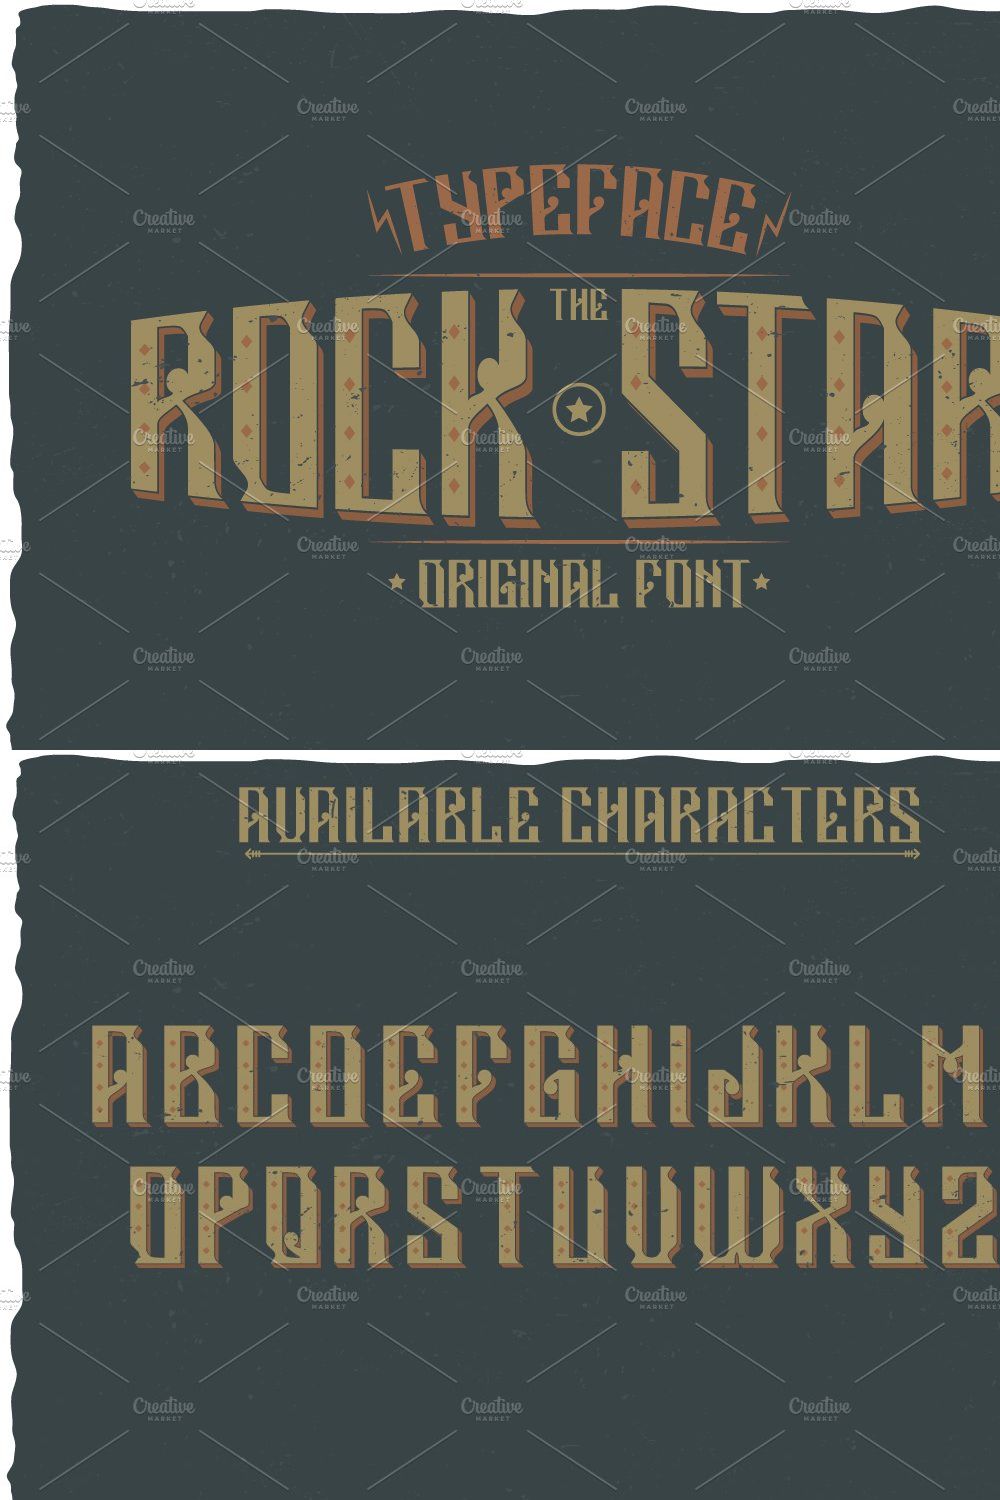 Rockstar Label Typeface pinterest preview image.